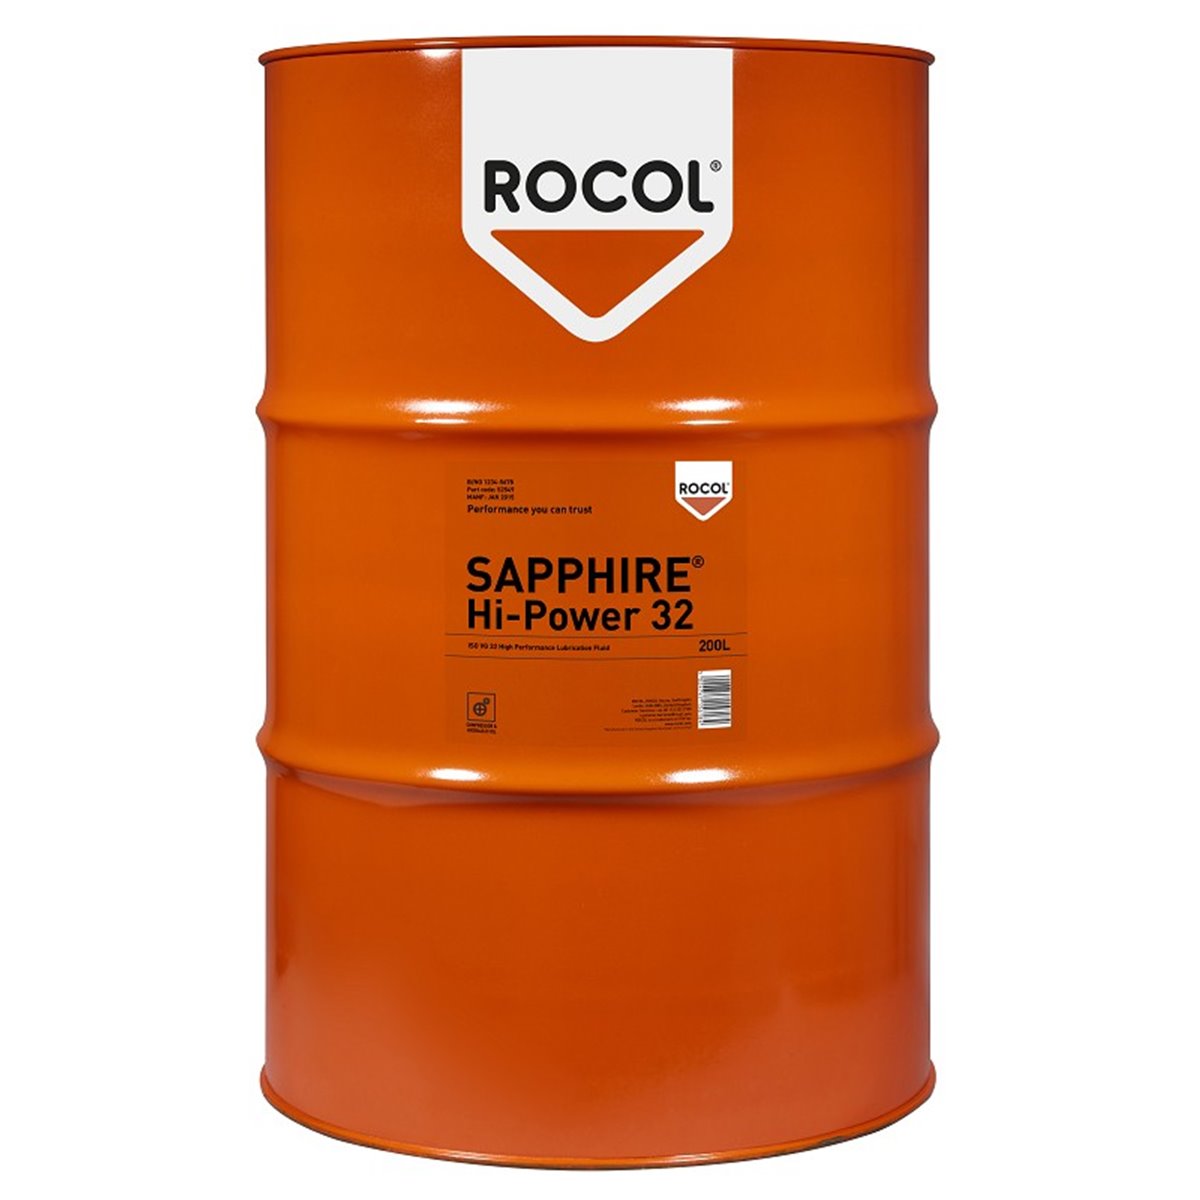 SAPPHIRE Hi-Power 32 Rocol 200l RS52549